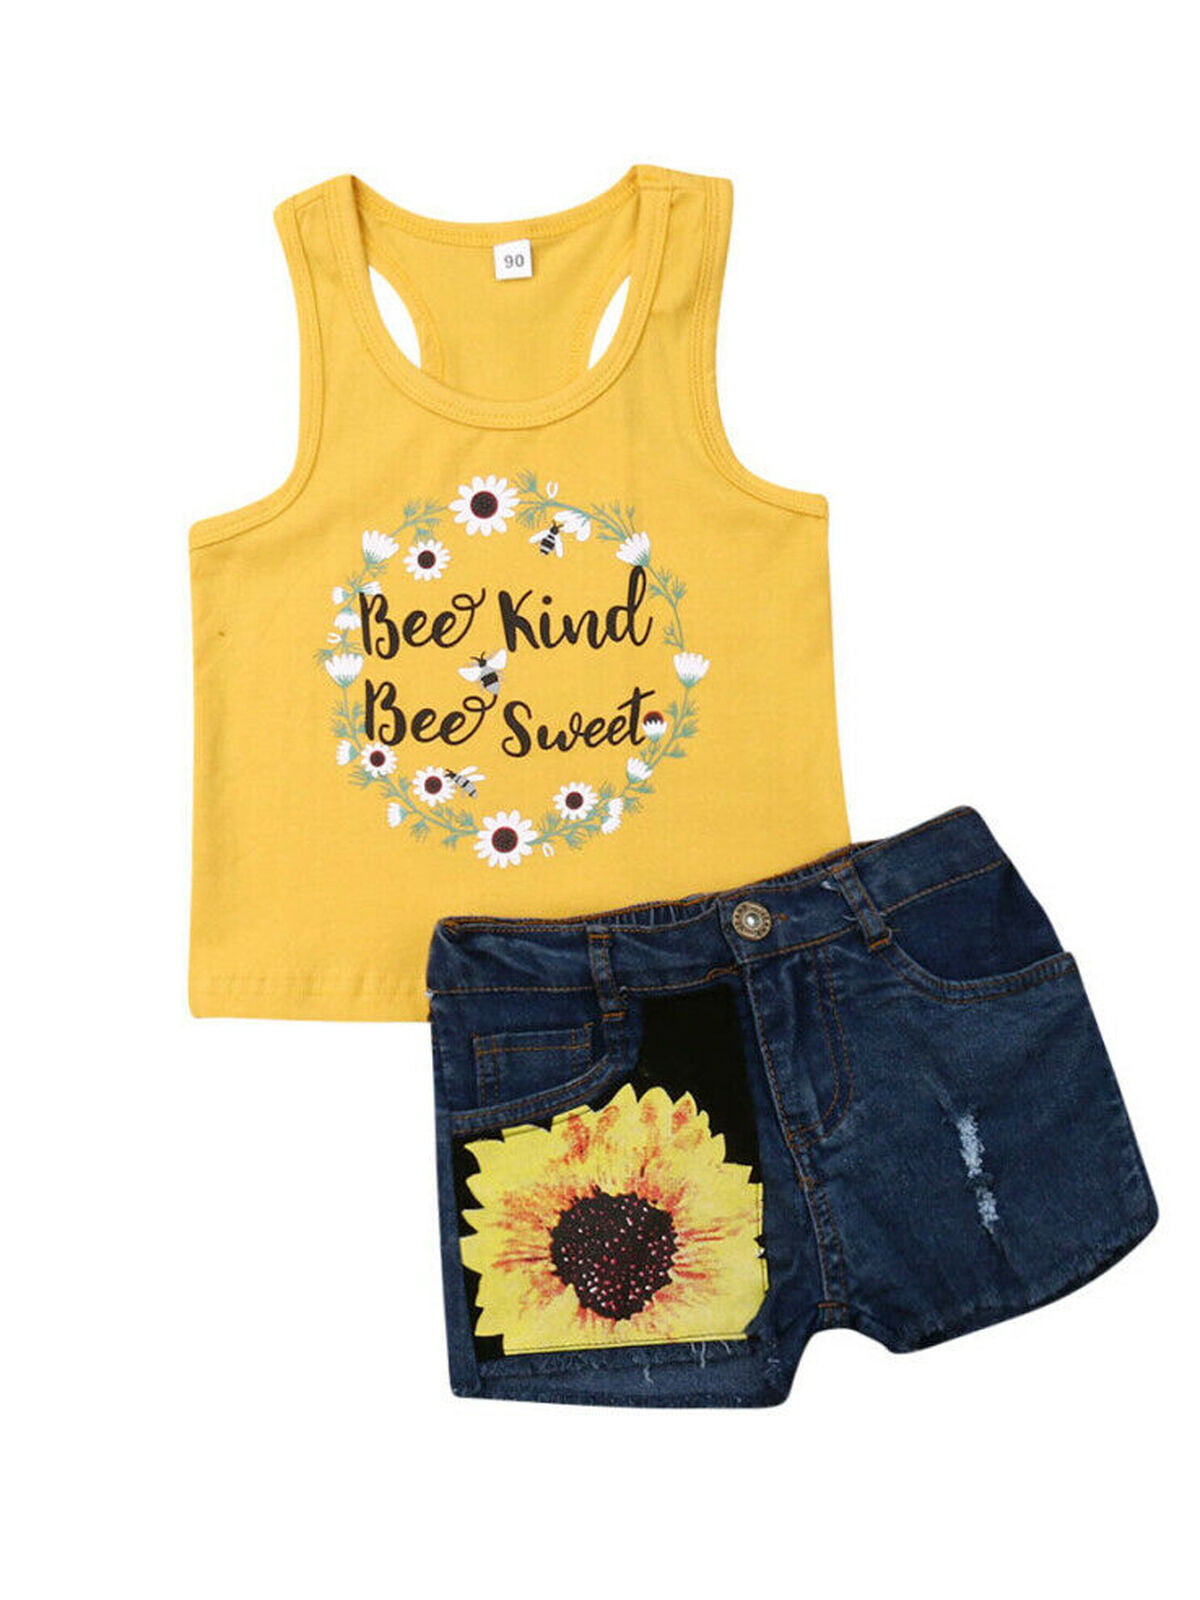 Toddler Kids Baby Girl Summer Tops T-shirt Denim Shorts 2Pcs Outfits Clothes